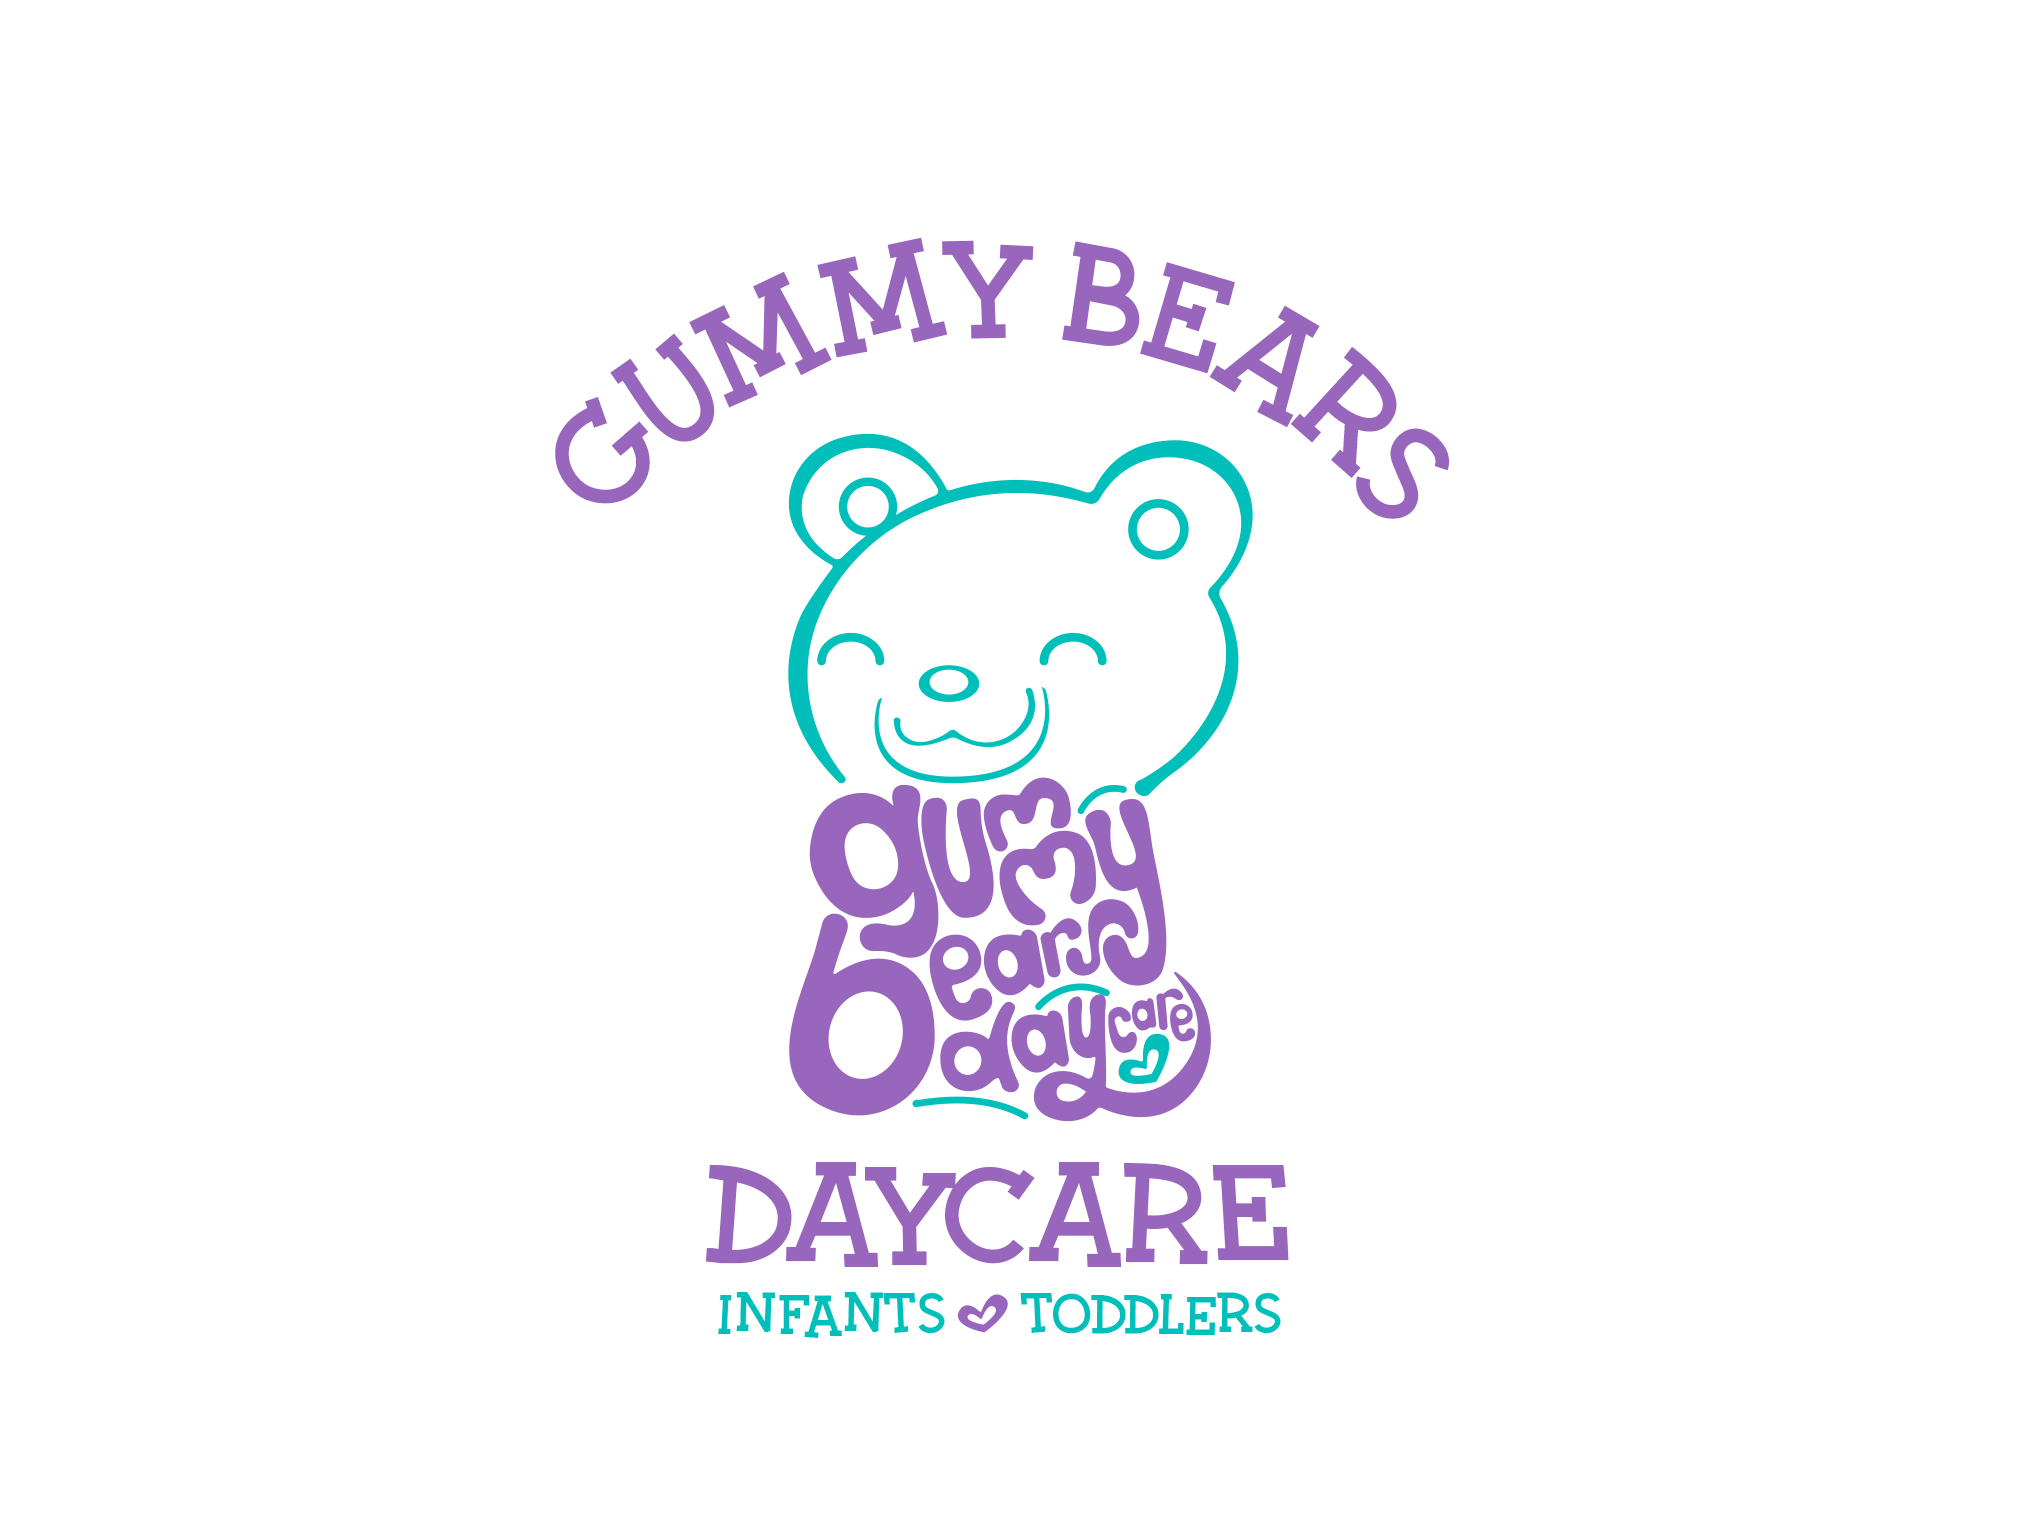 https://newmangrace.com/project/gummy-bears-daycare/